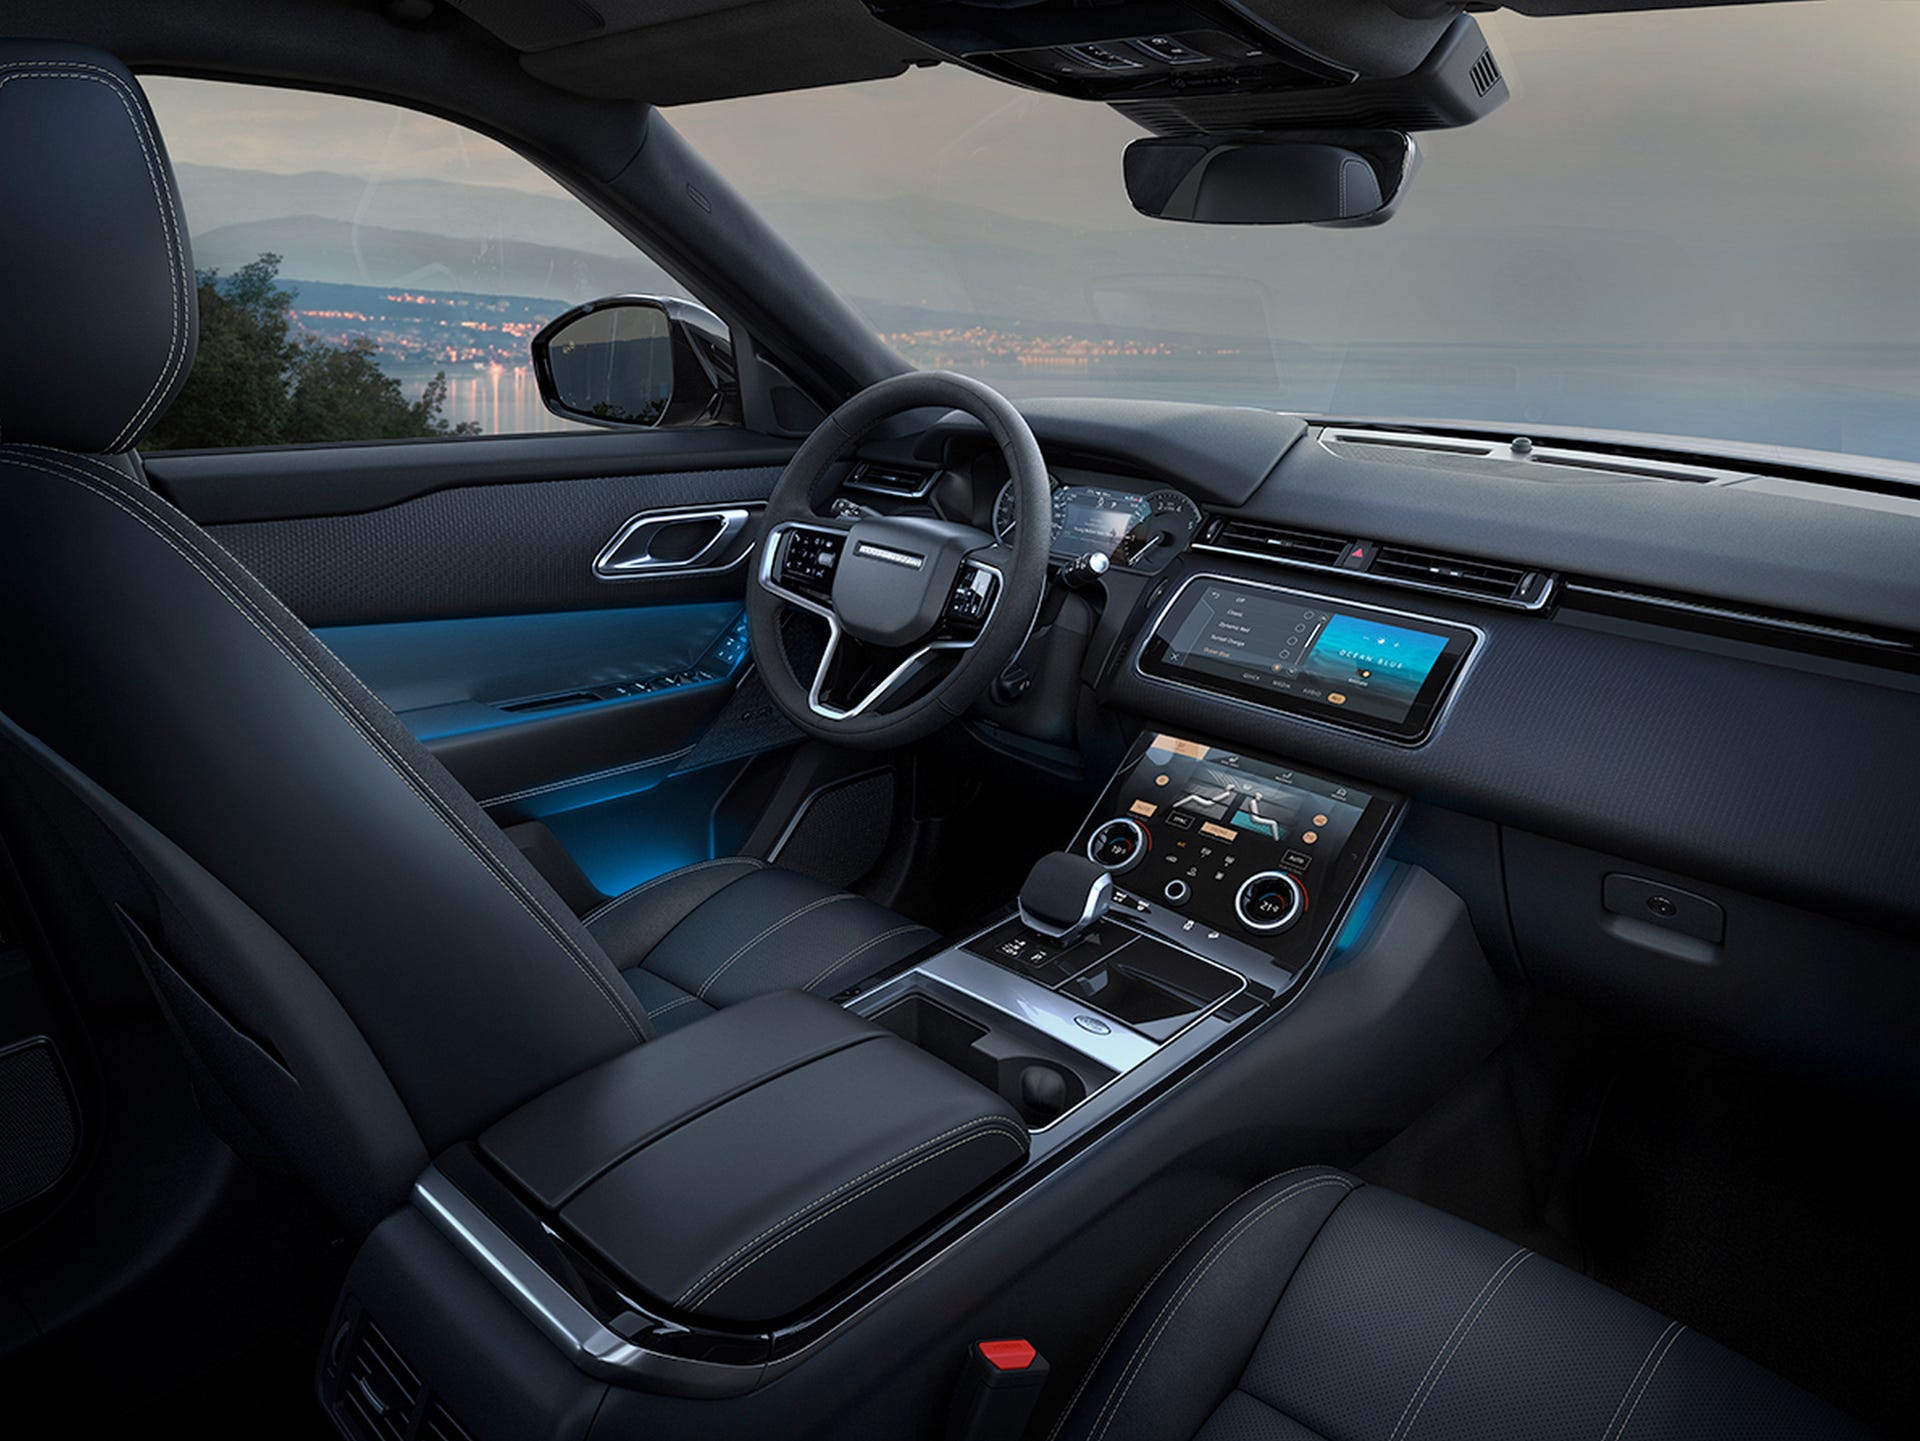 luxury SUV interior in black